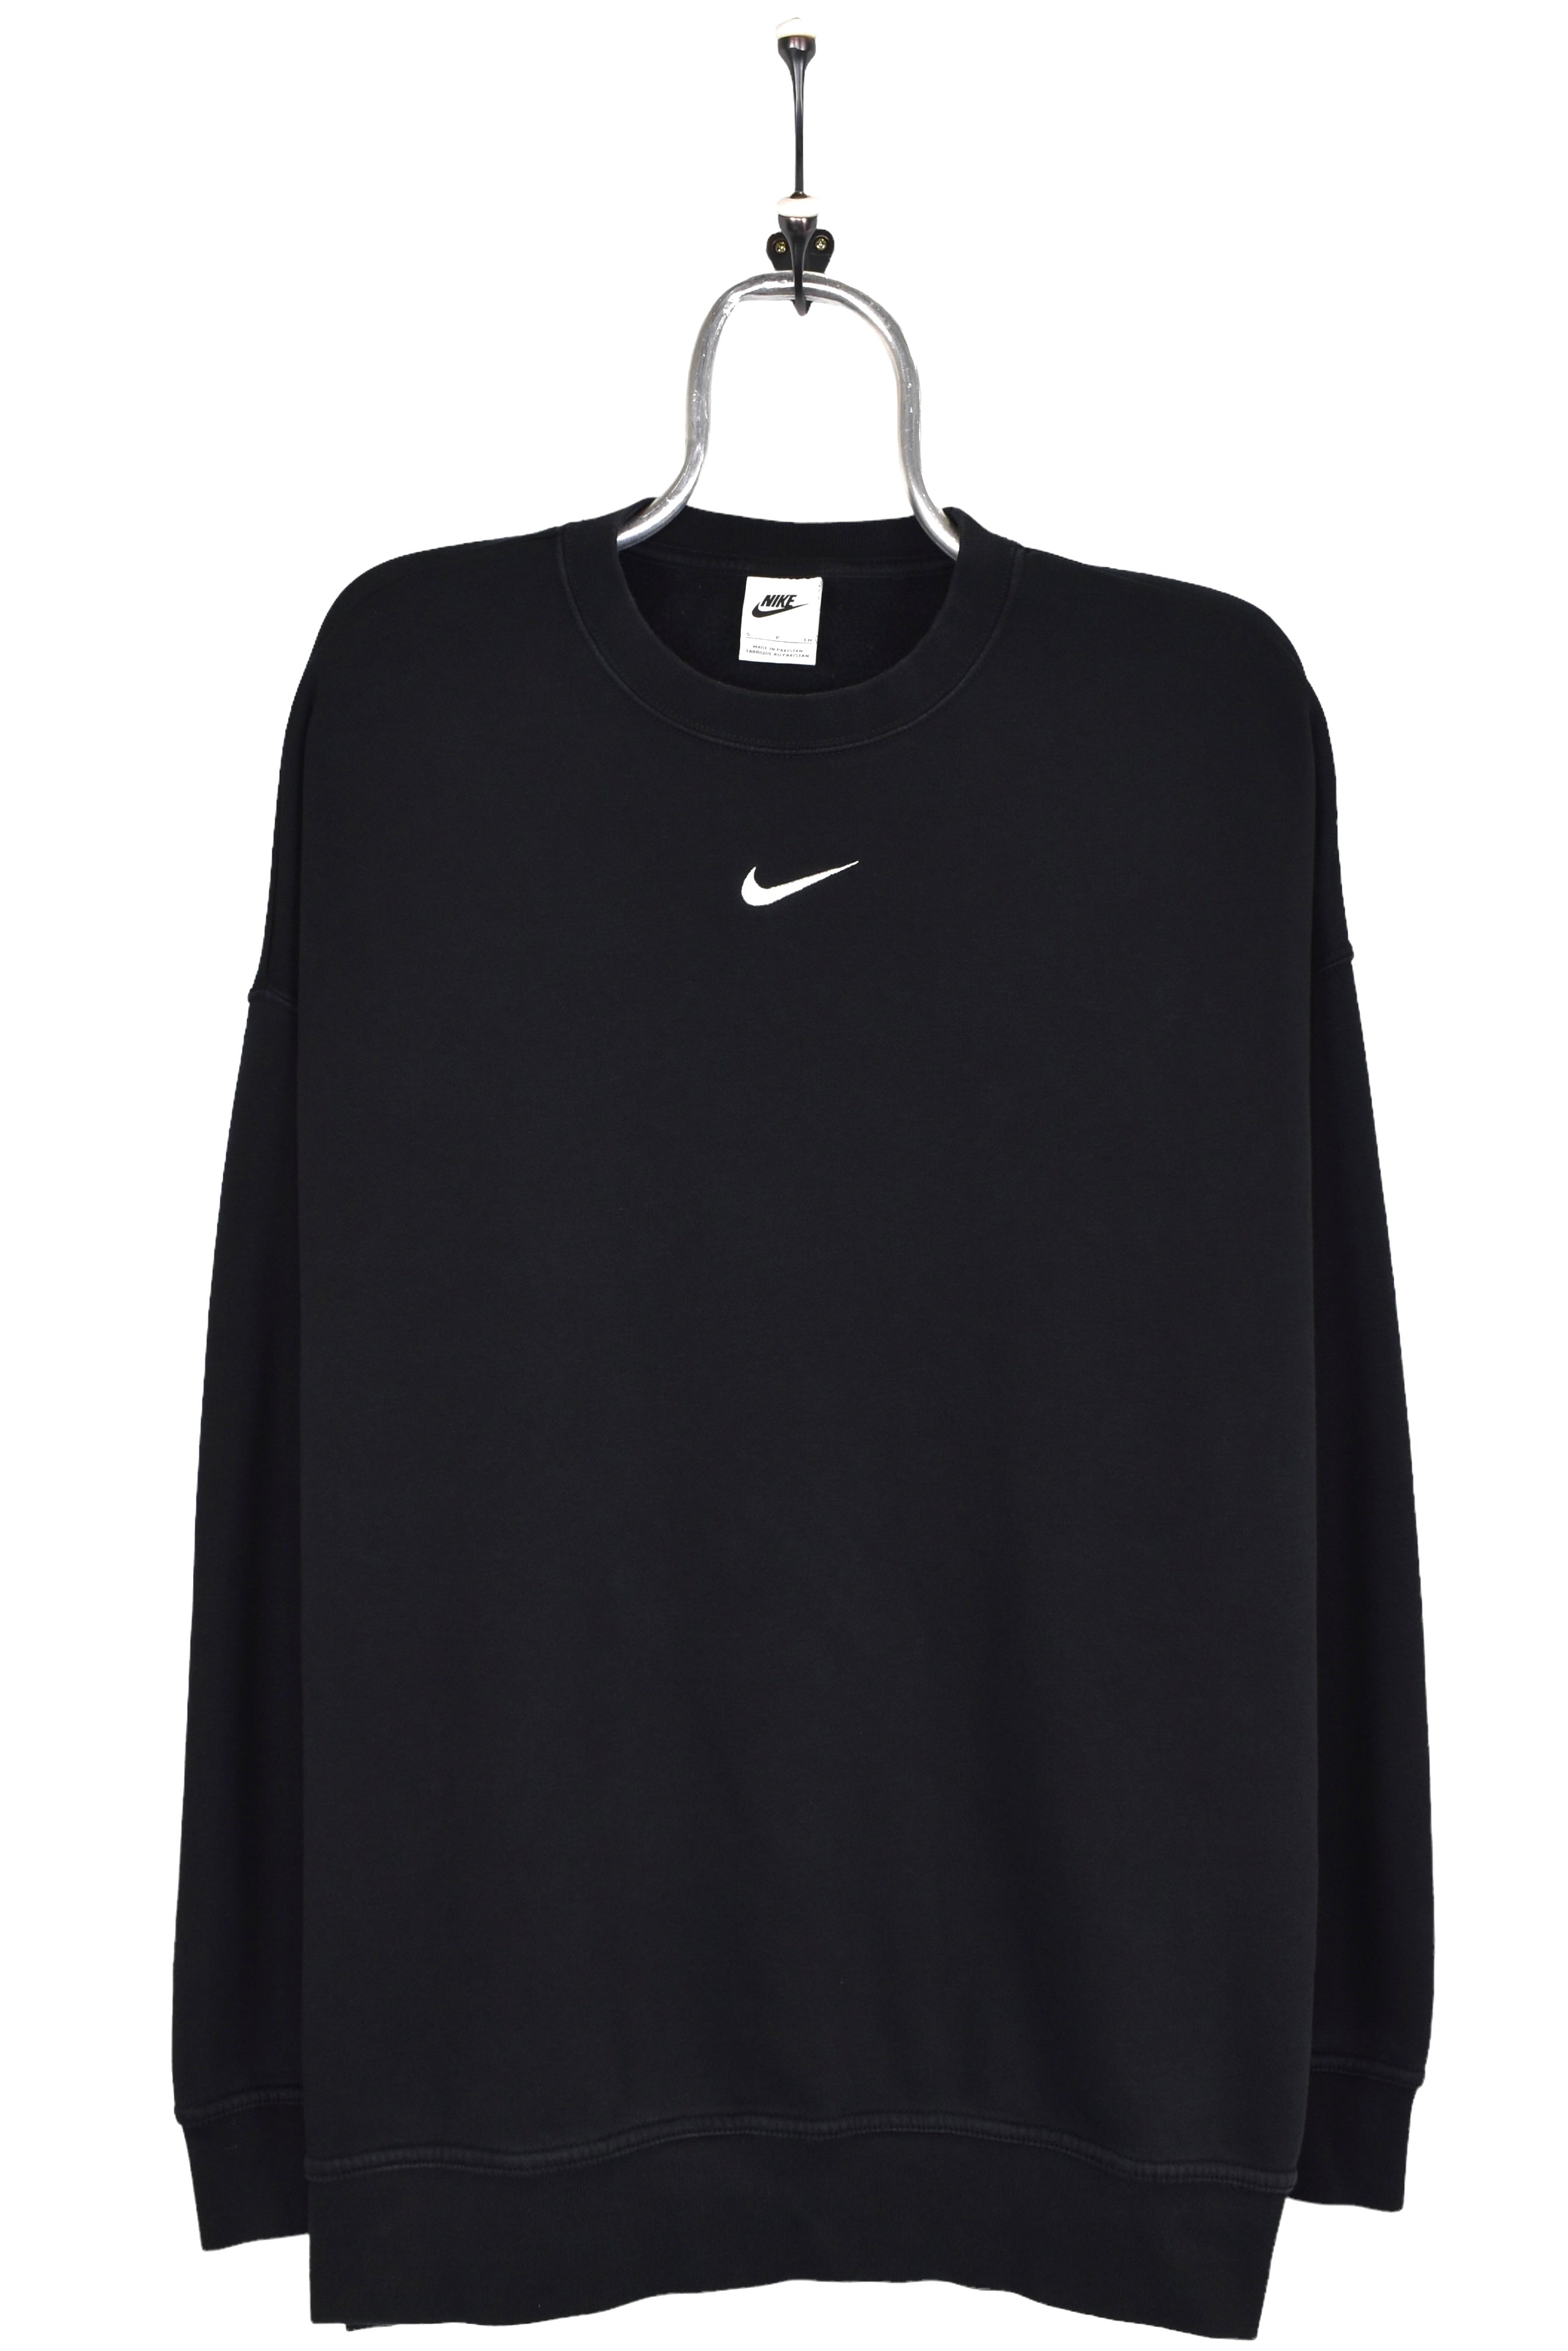 Vintage Nike sweatshirt, black centre swoosh embroidered crewneck - XL